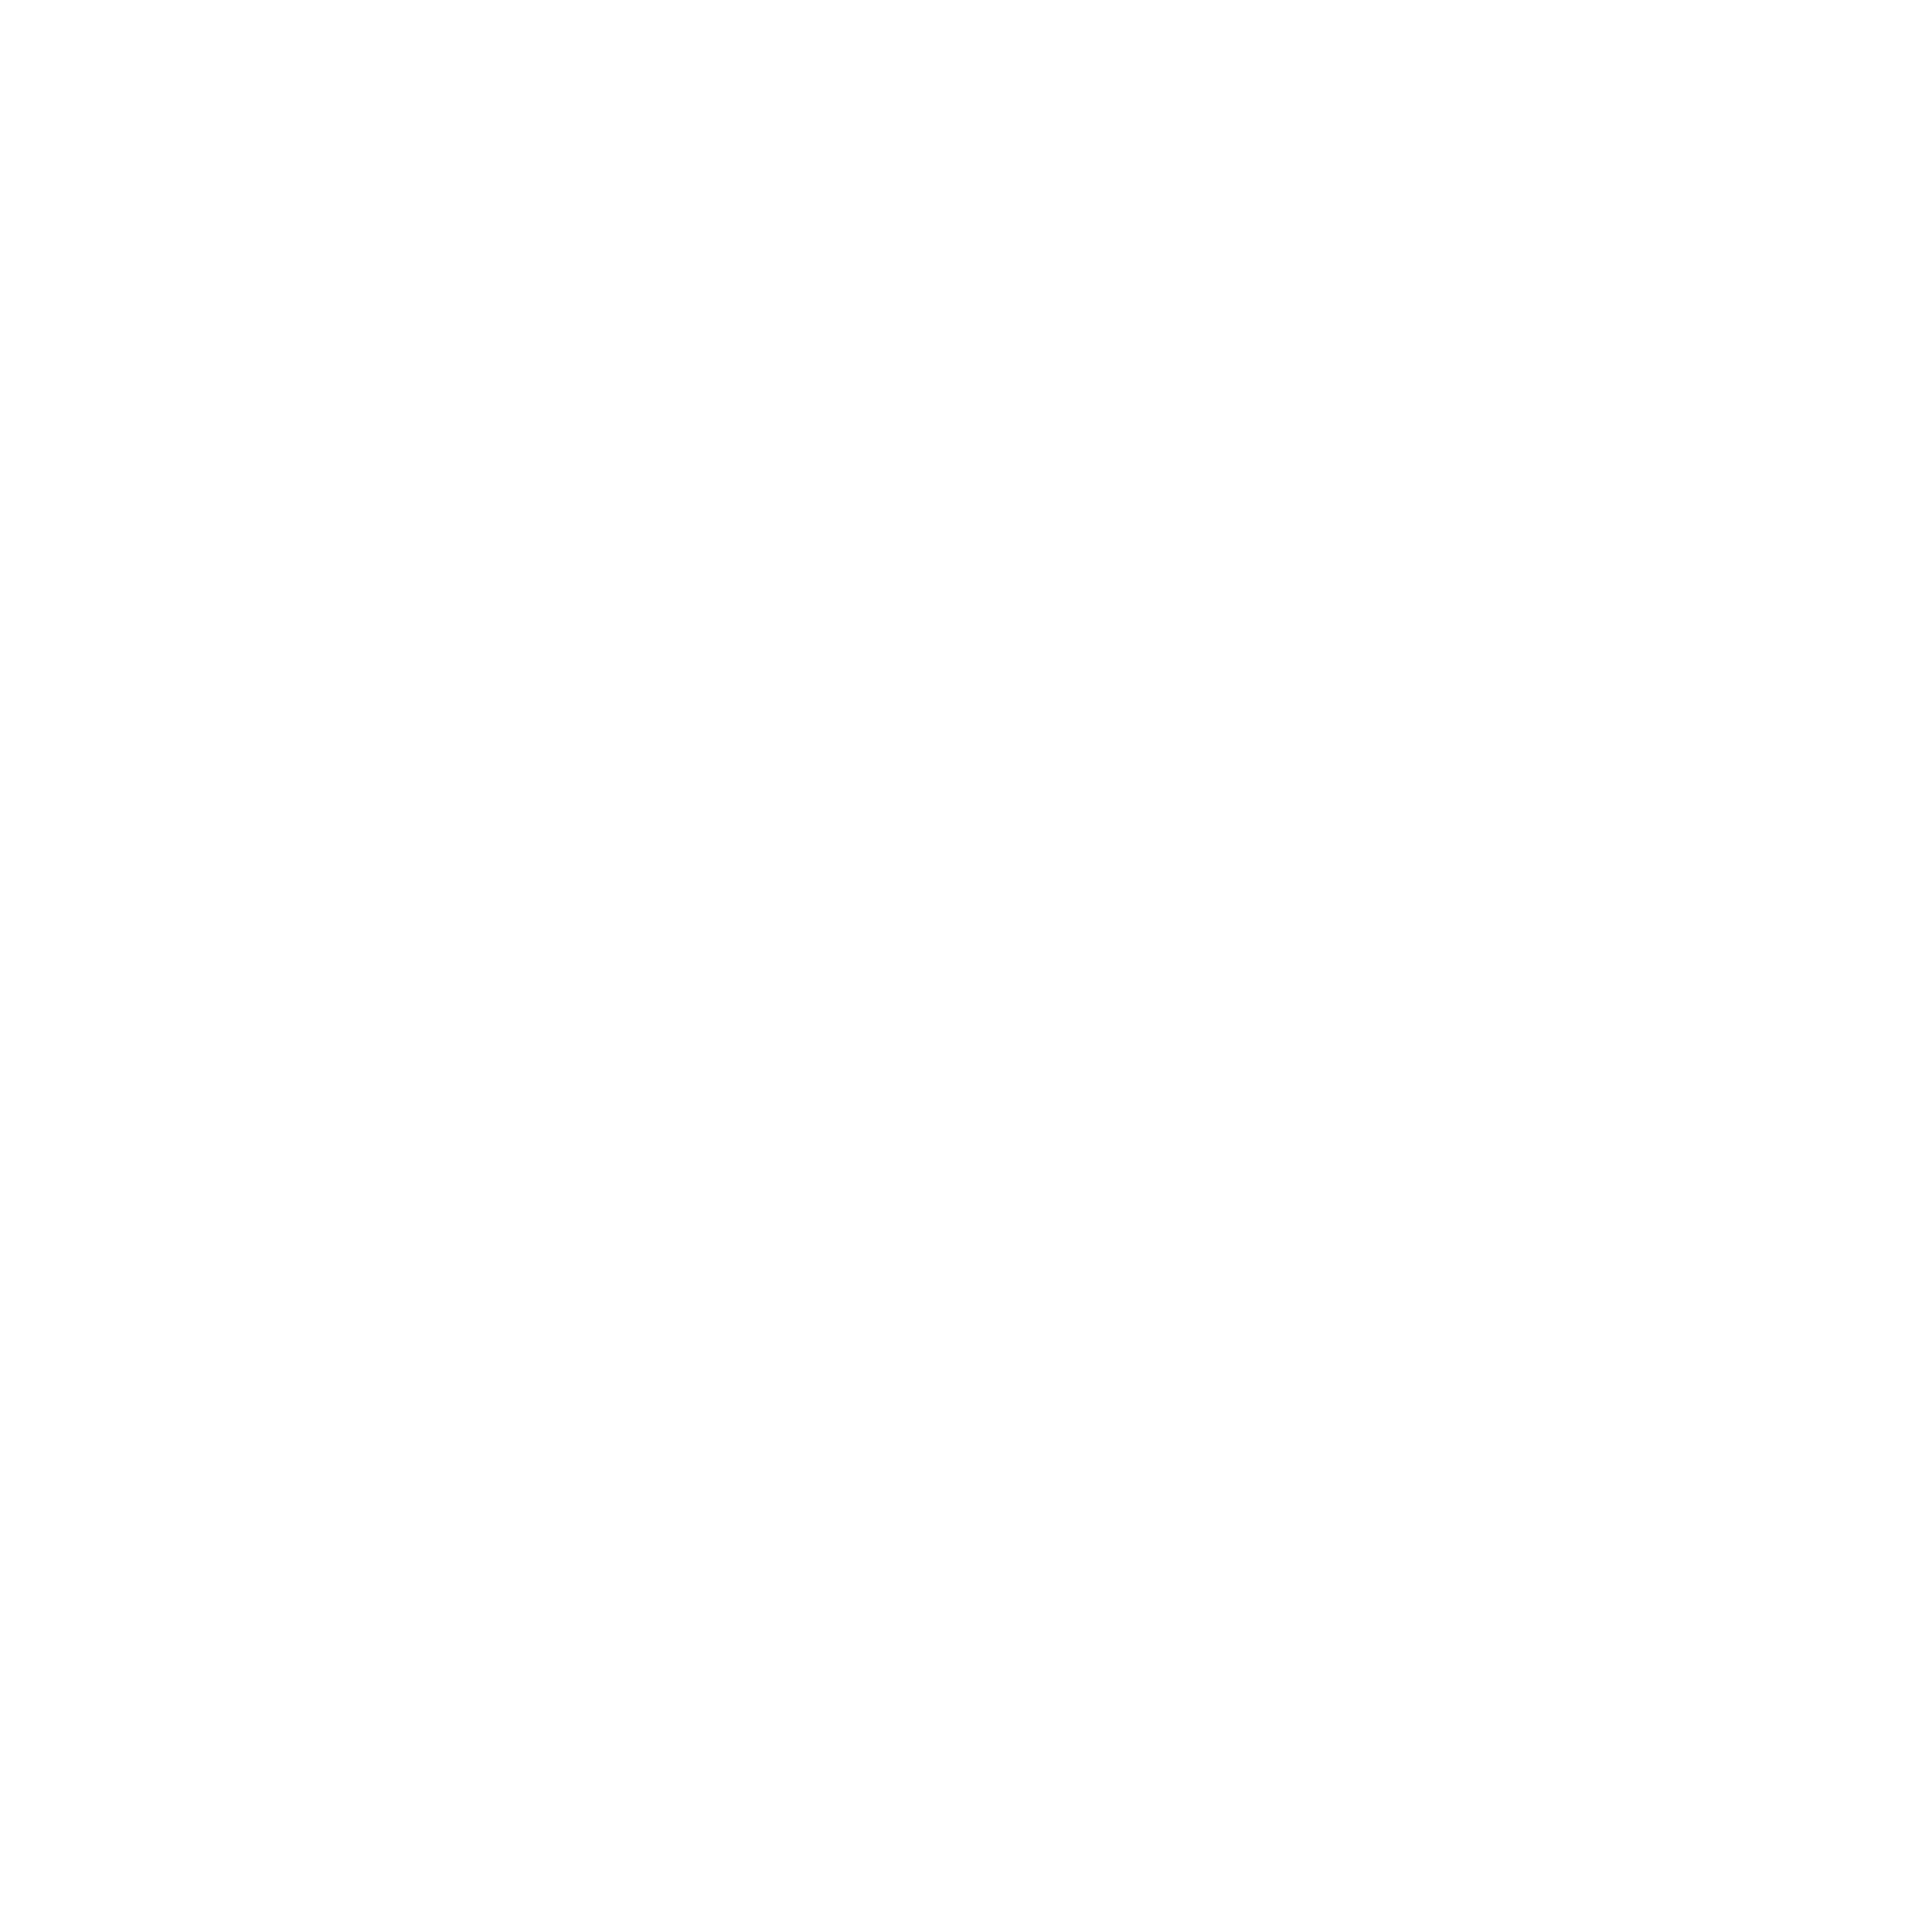 3 Sheeps Brewing